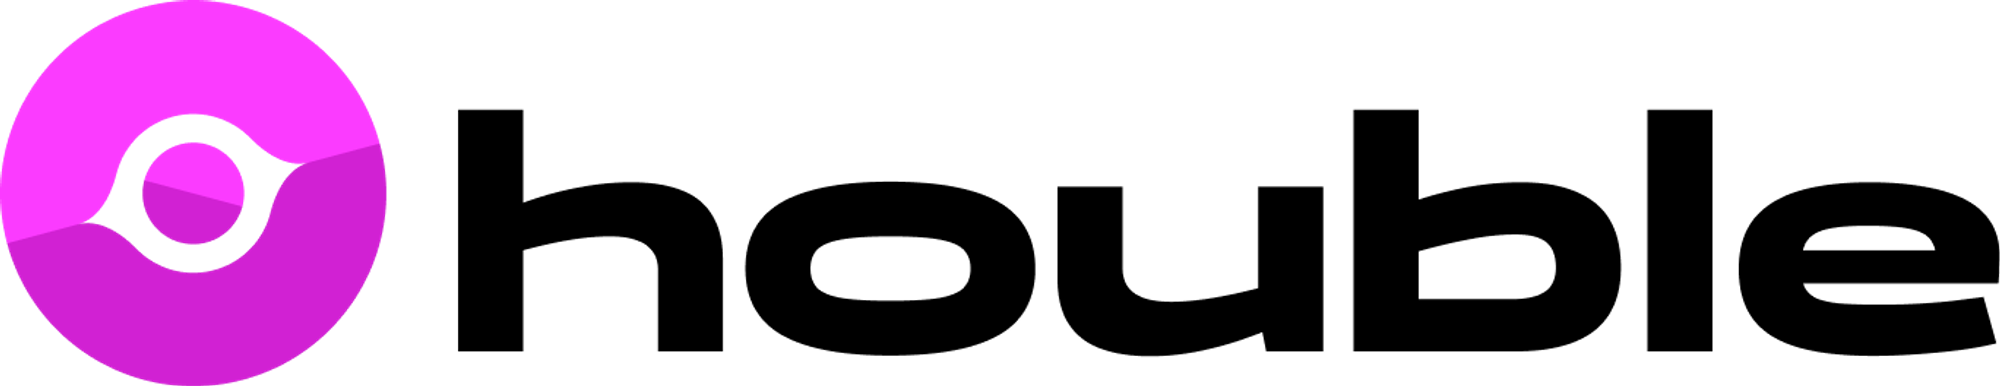 Modern logo design for houble.com